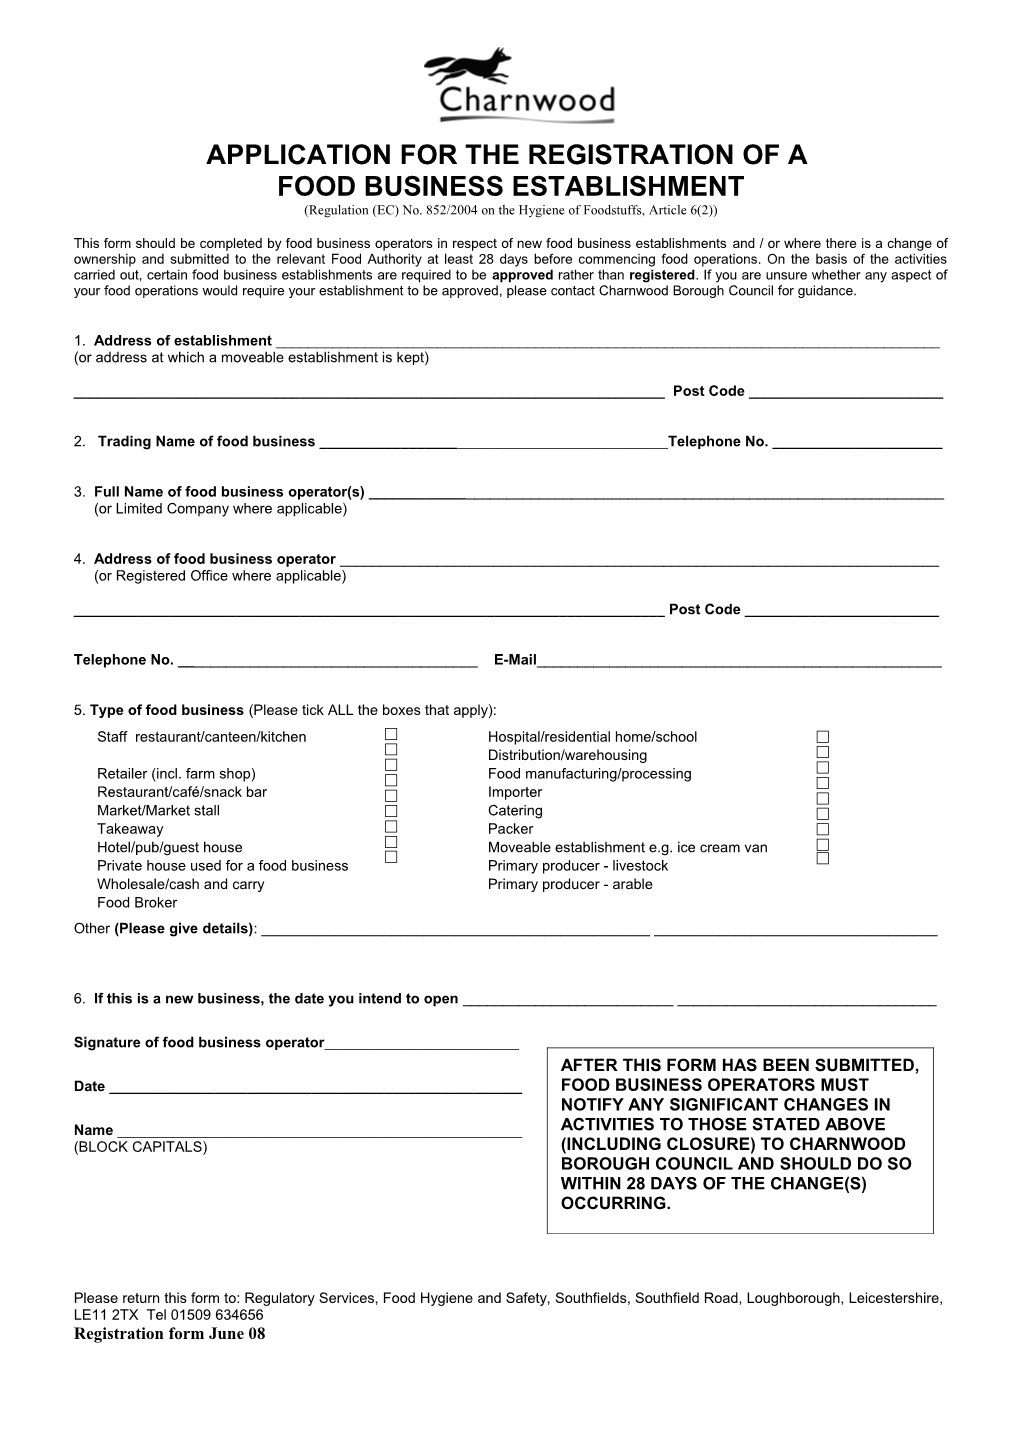 ANNEX 2: Model Application Form for the Registration of a Food Business Establishment